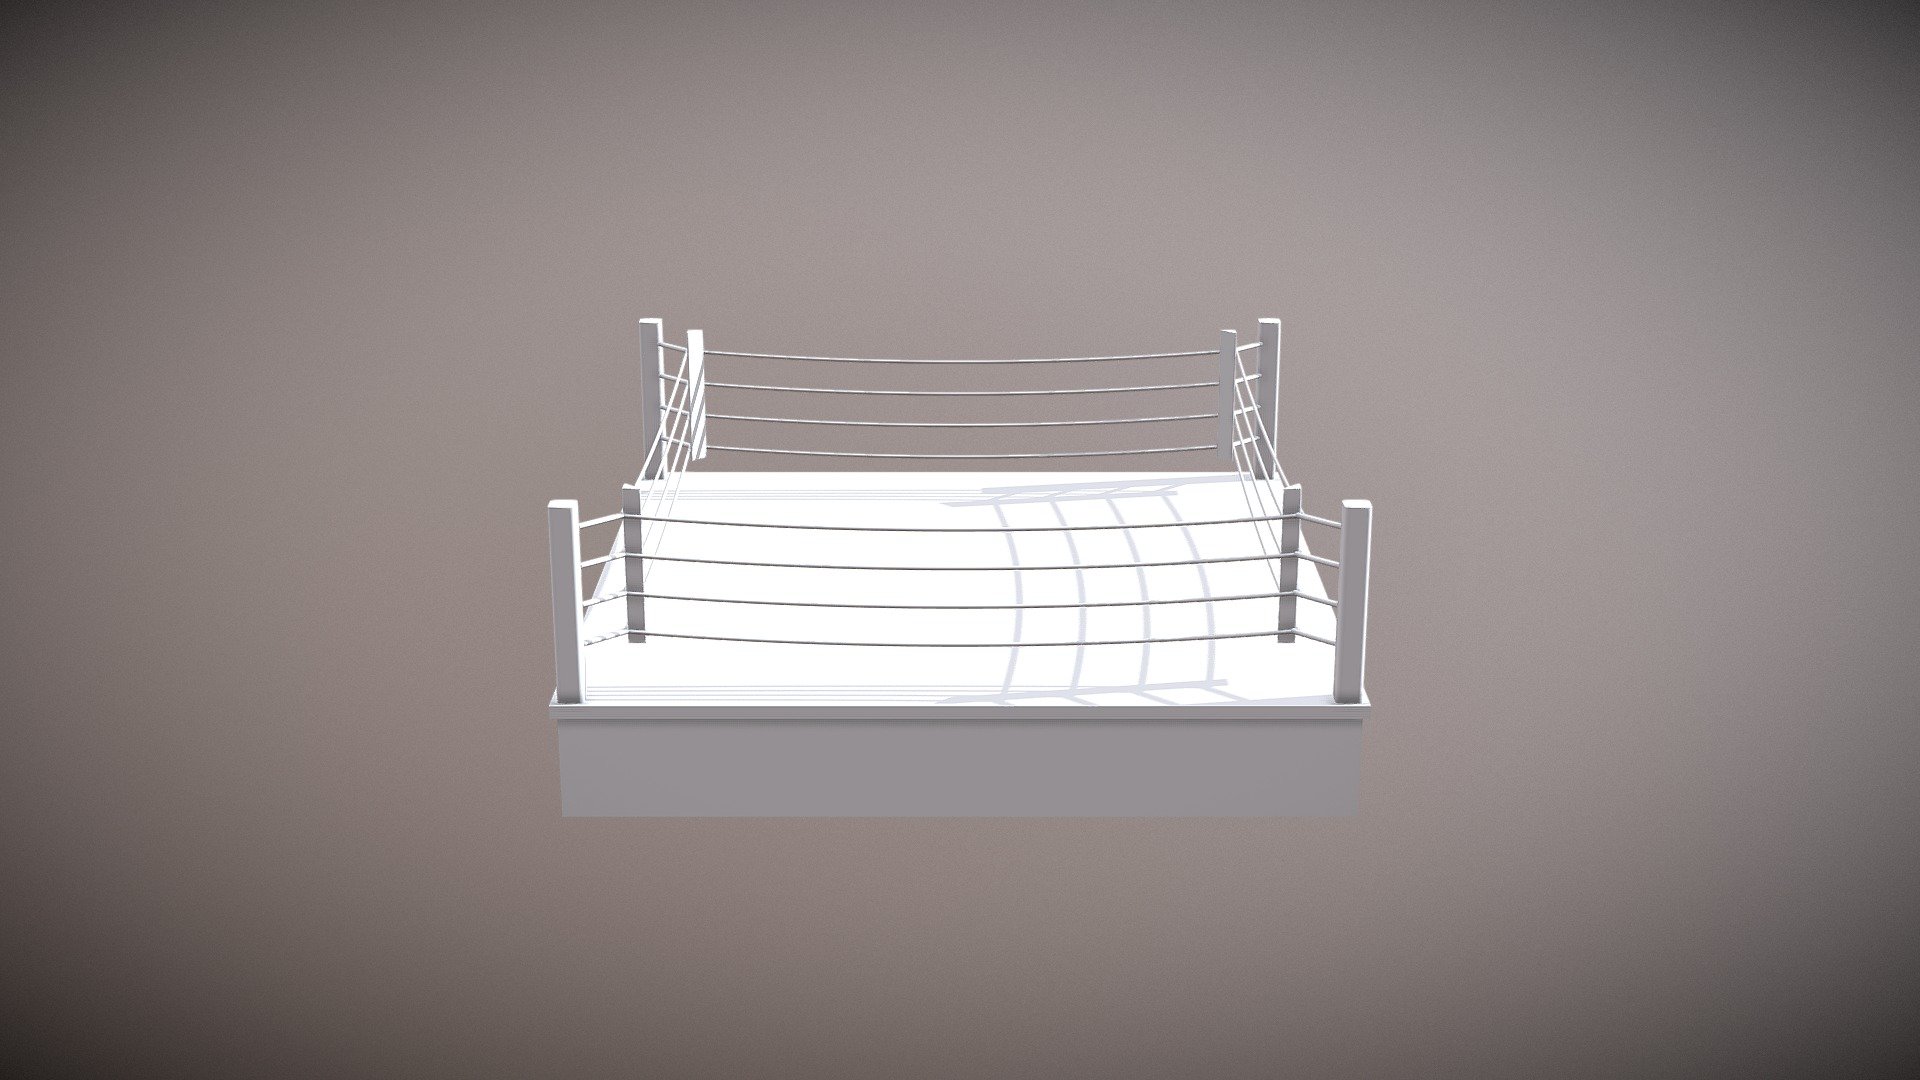 Boxing ring 6m x 6m - Boxing ring - Download Free 3D model by bamgbalat 3d model